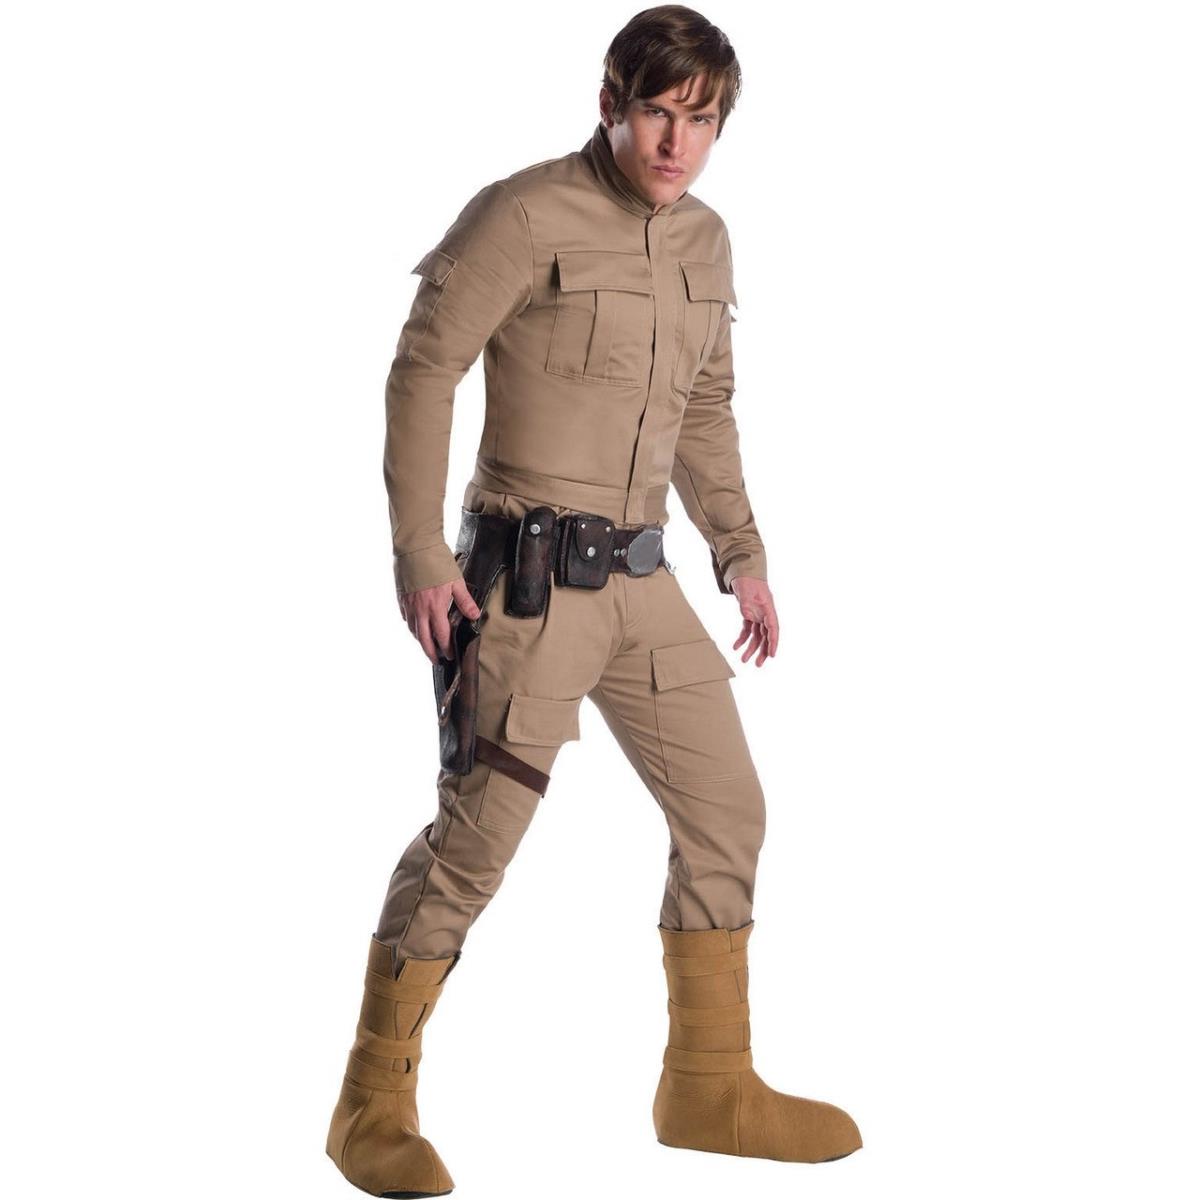 280514 Mens Star Wars Luke Skywalker Costume, Extra Small 34-36